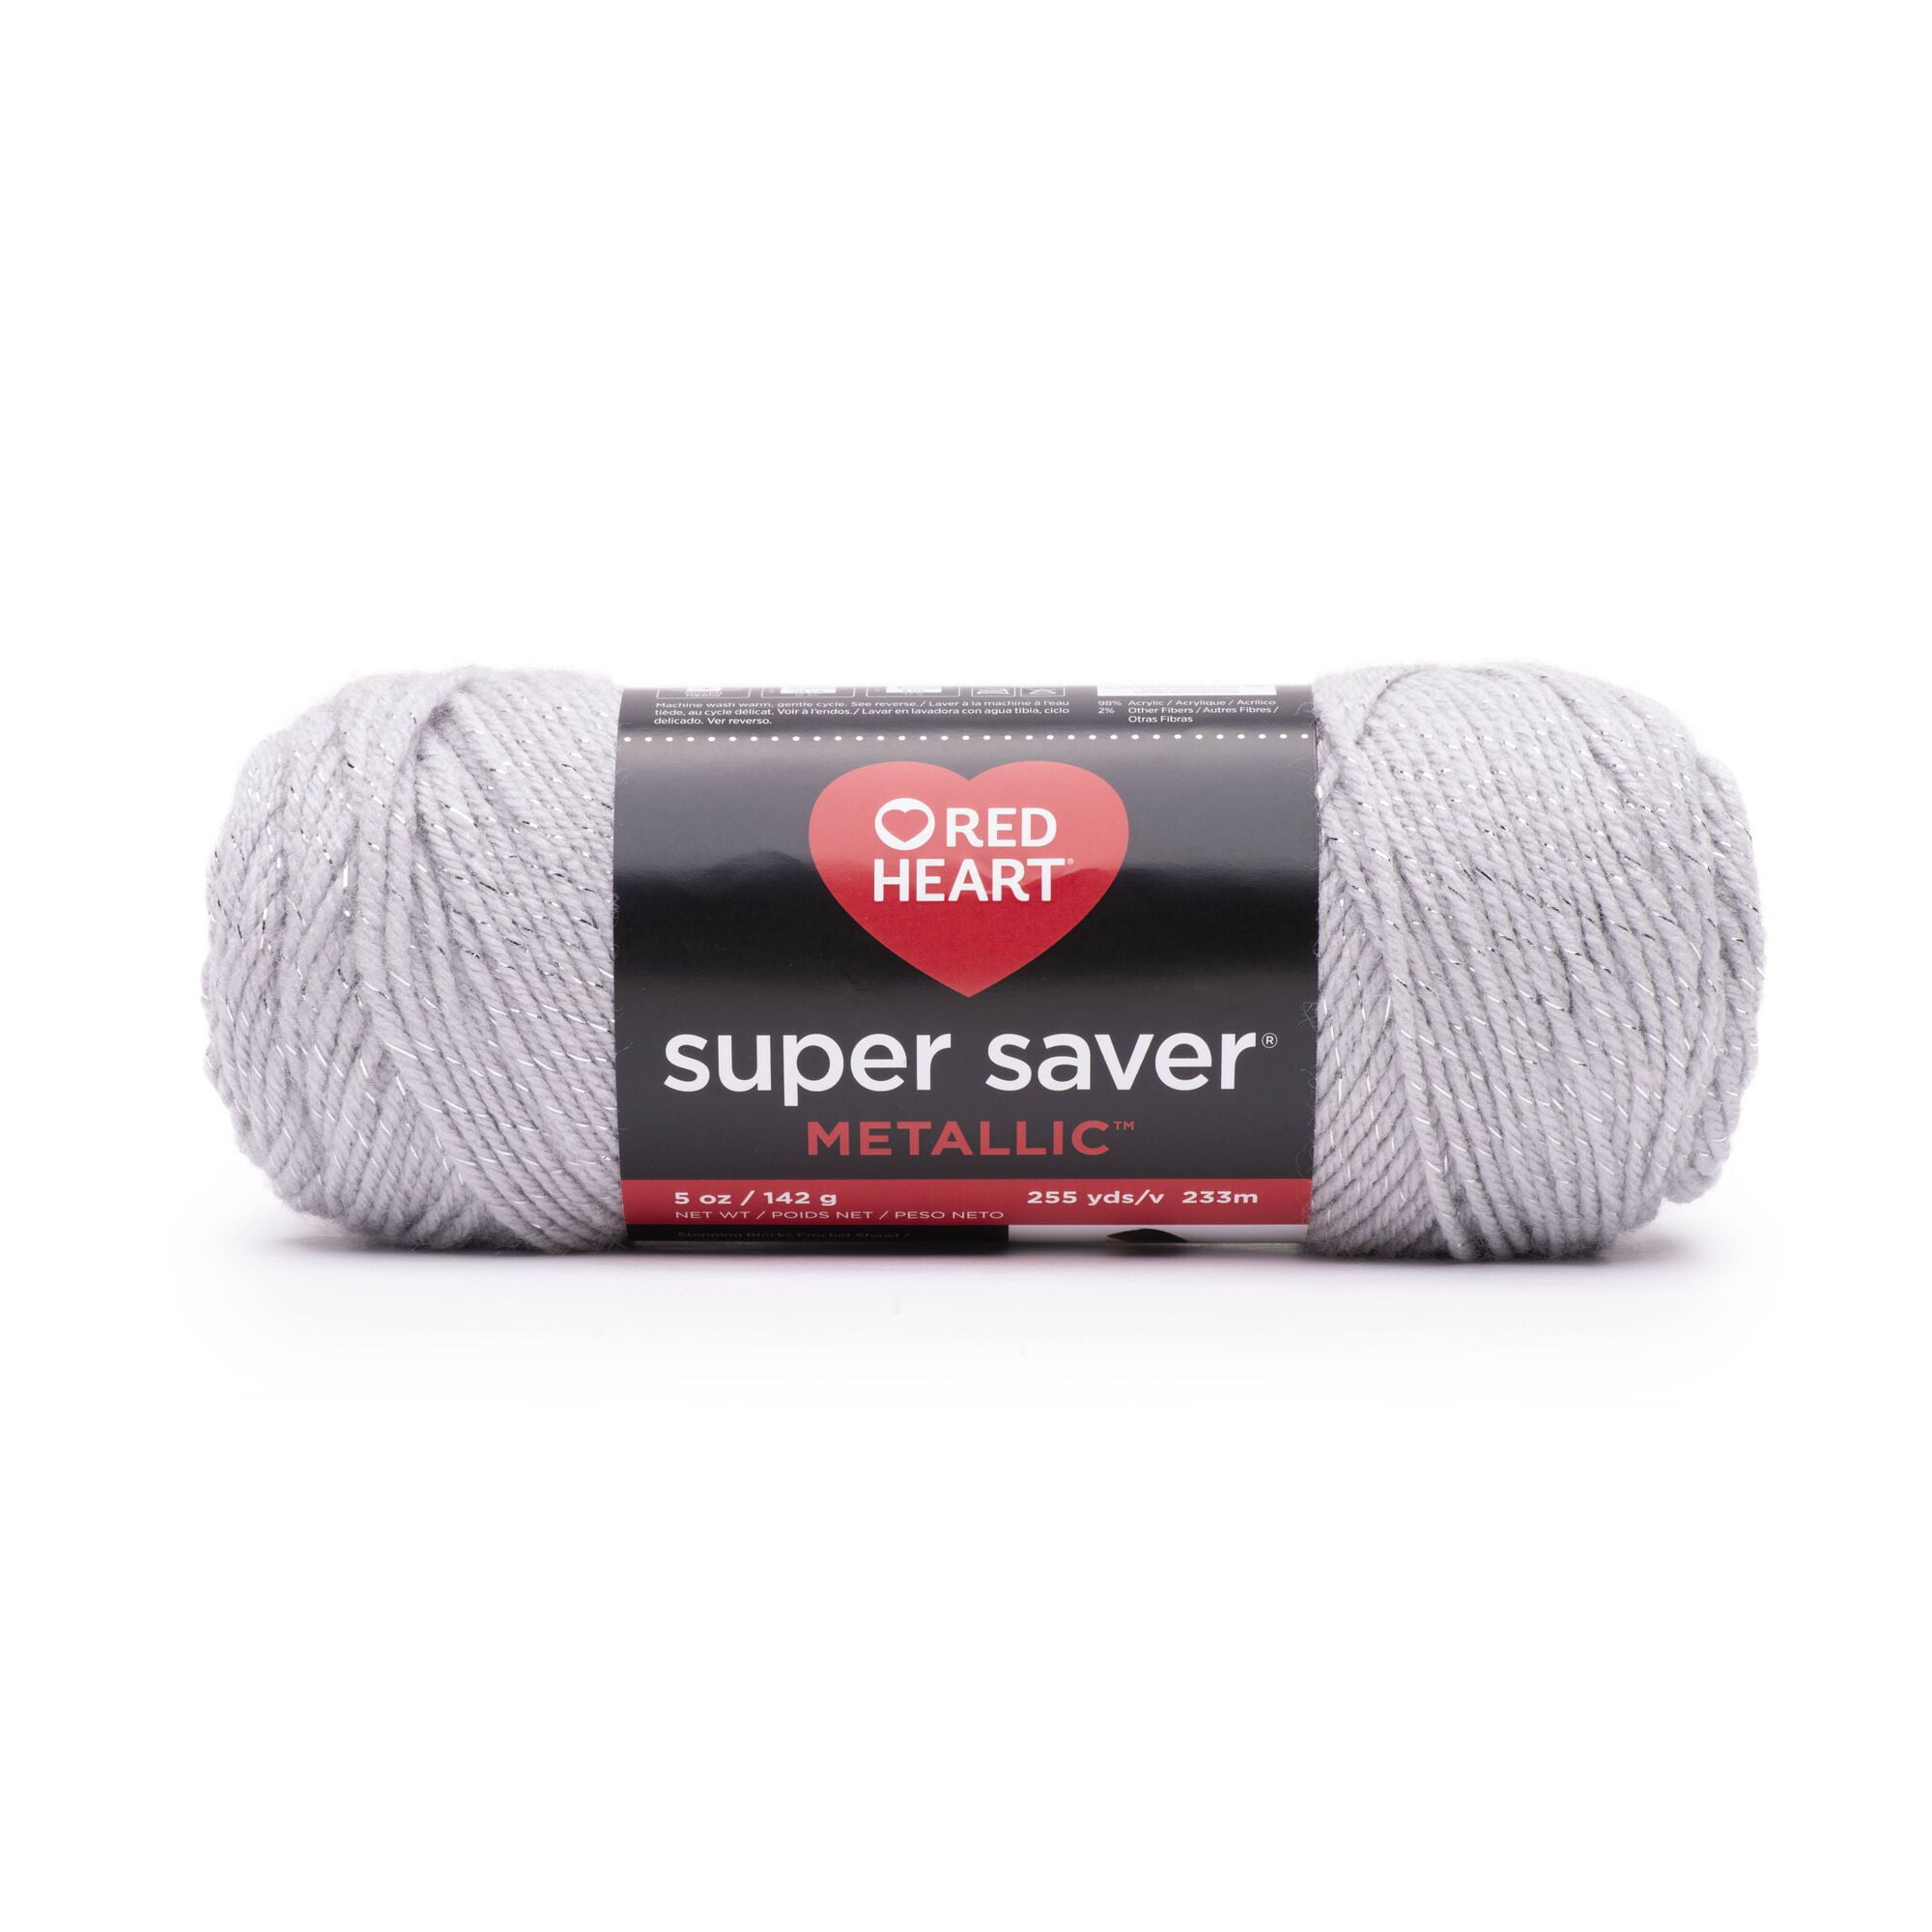 Red Heart Super Saver Metallic 4 Medium Acrylic Yarn, Light Grey 5oz/142g,  255 Yards